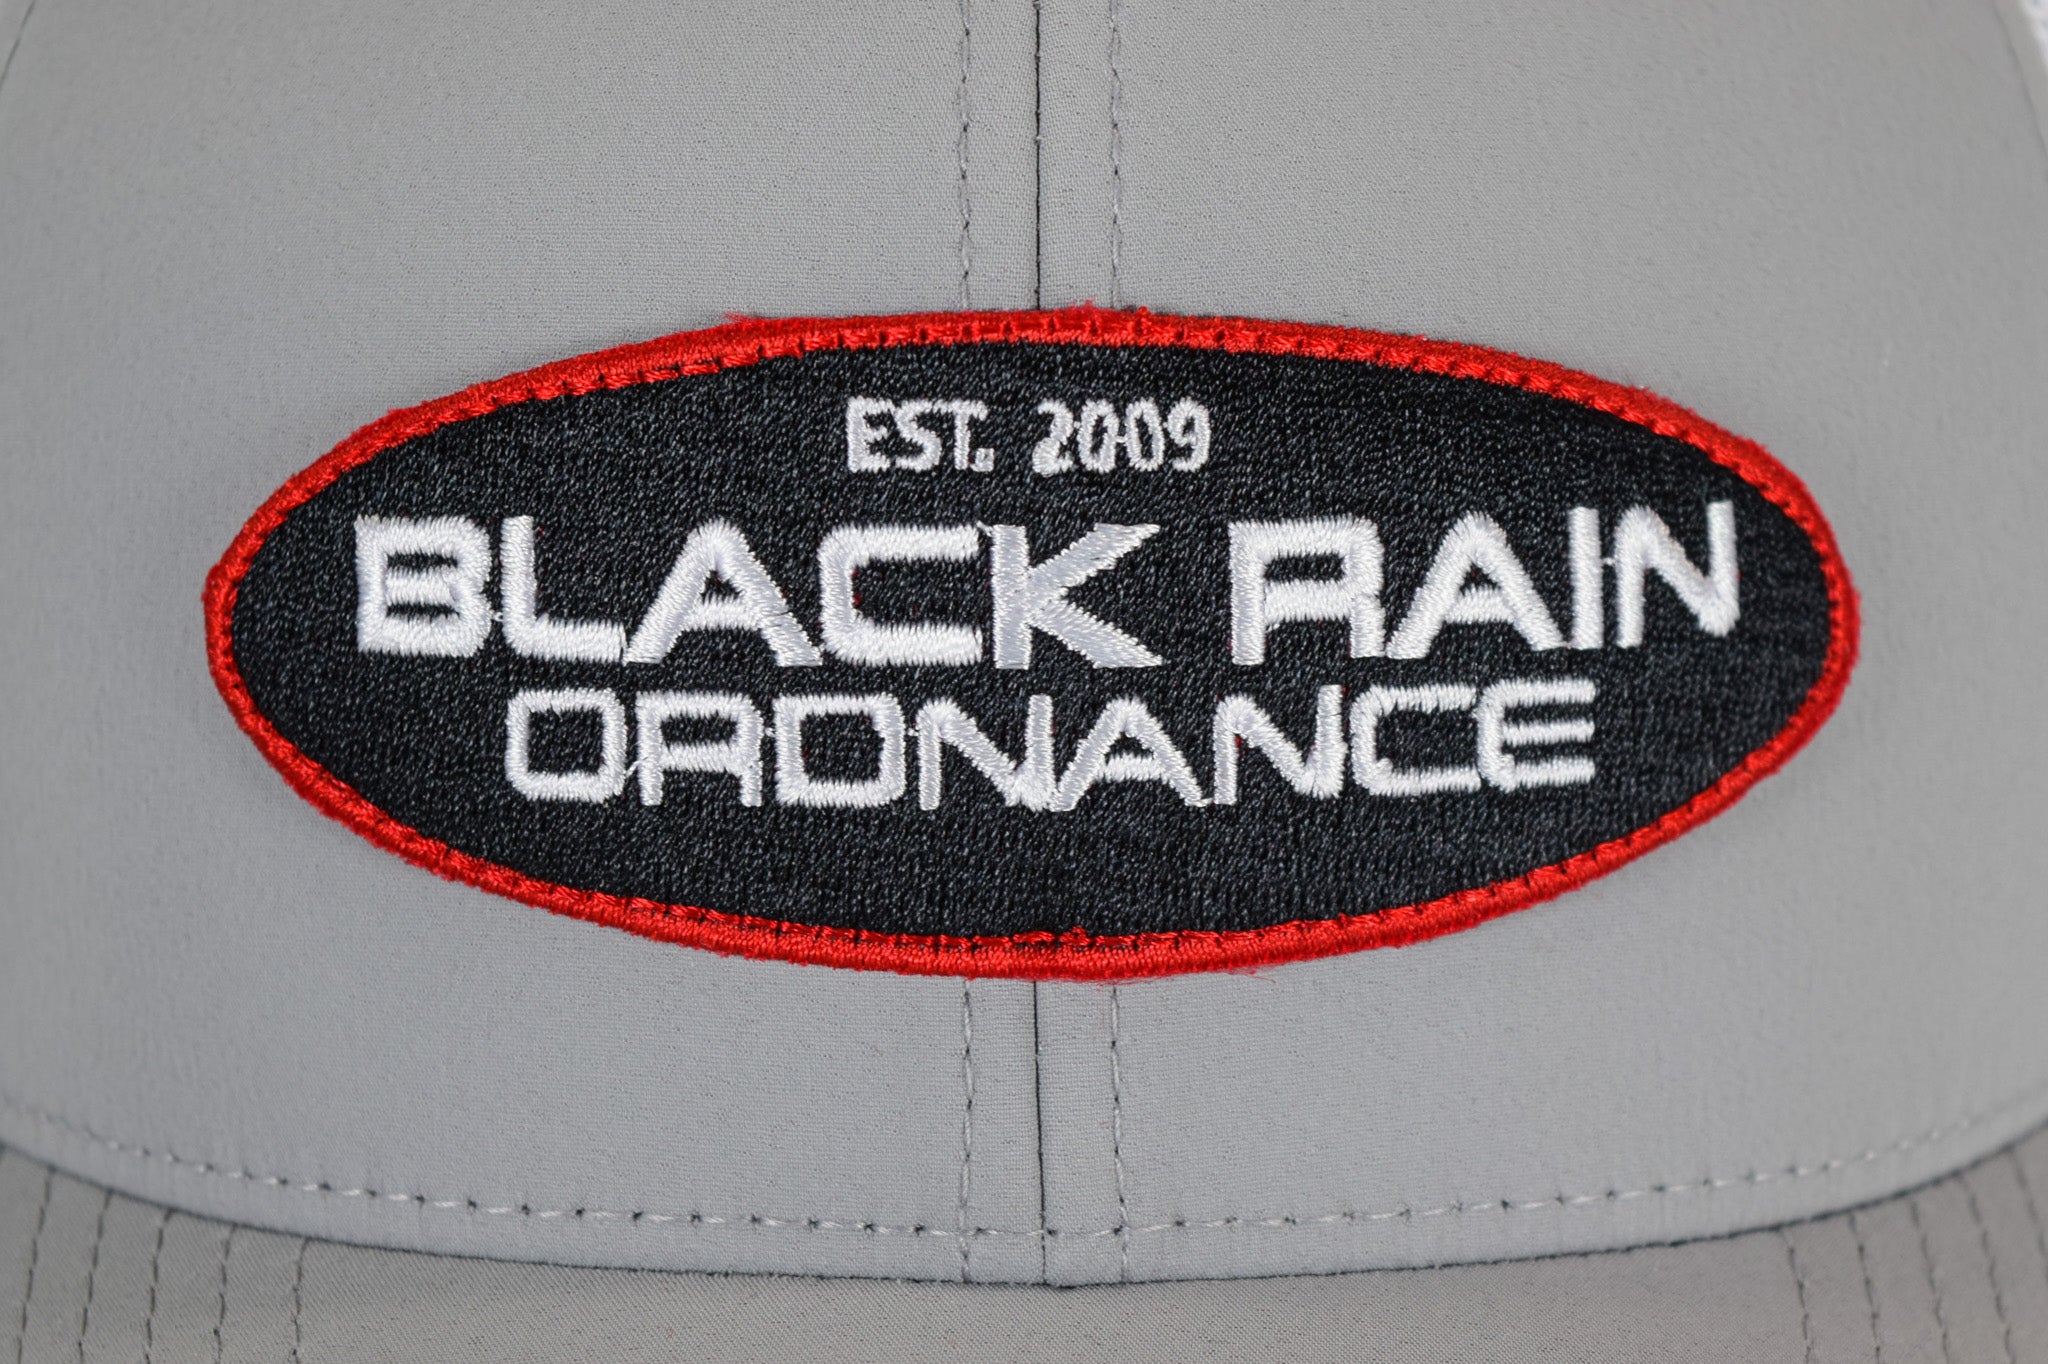 Black Rain Ordnance Grey Outdoor Snapback Hat w/ Round Oval Patch & Mesh Back